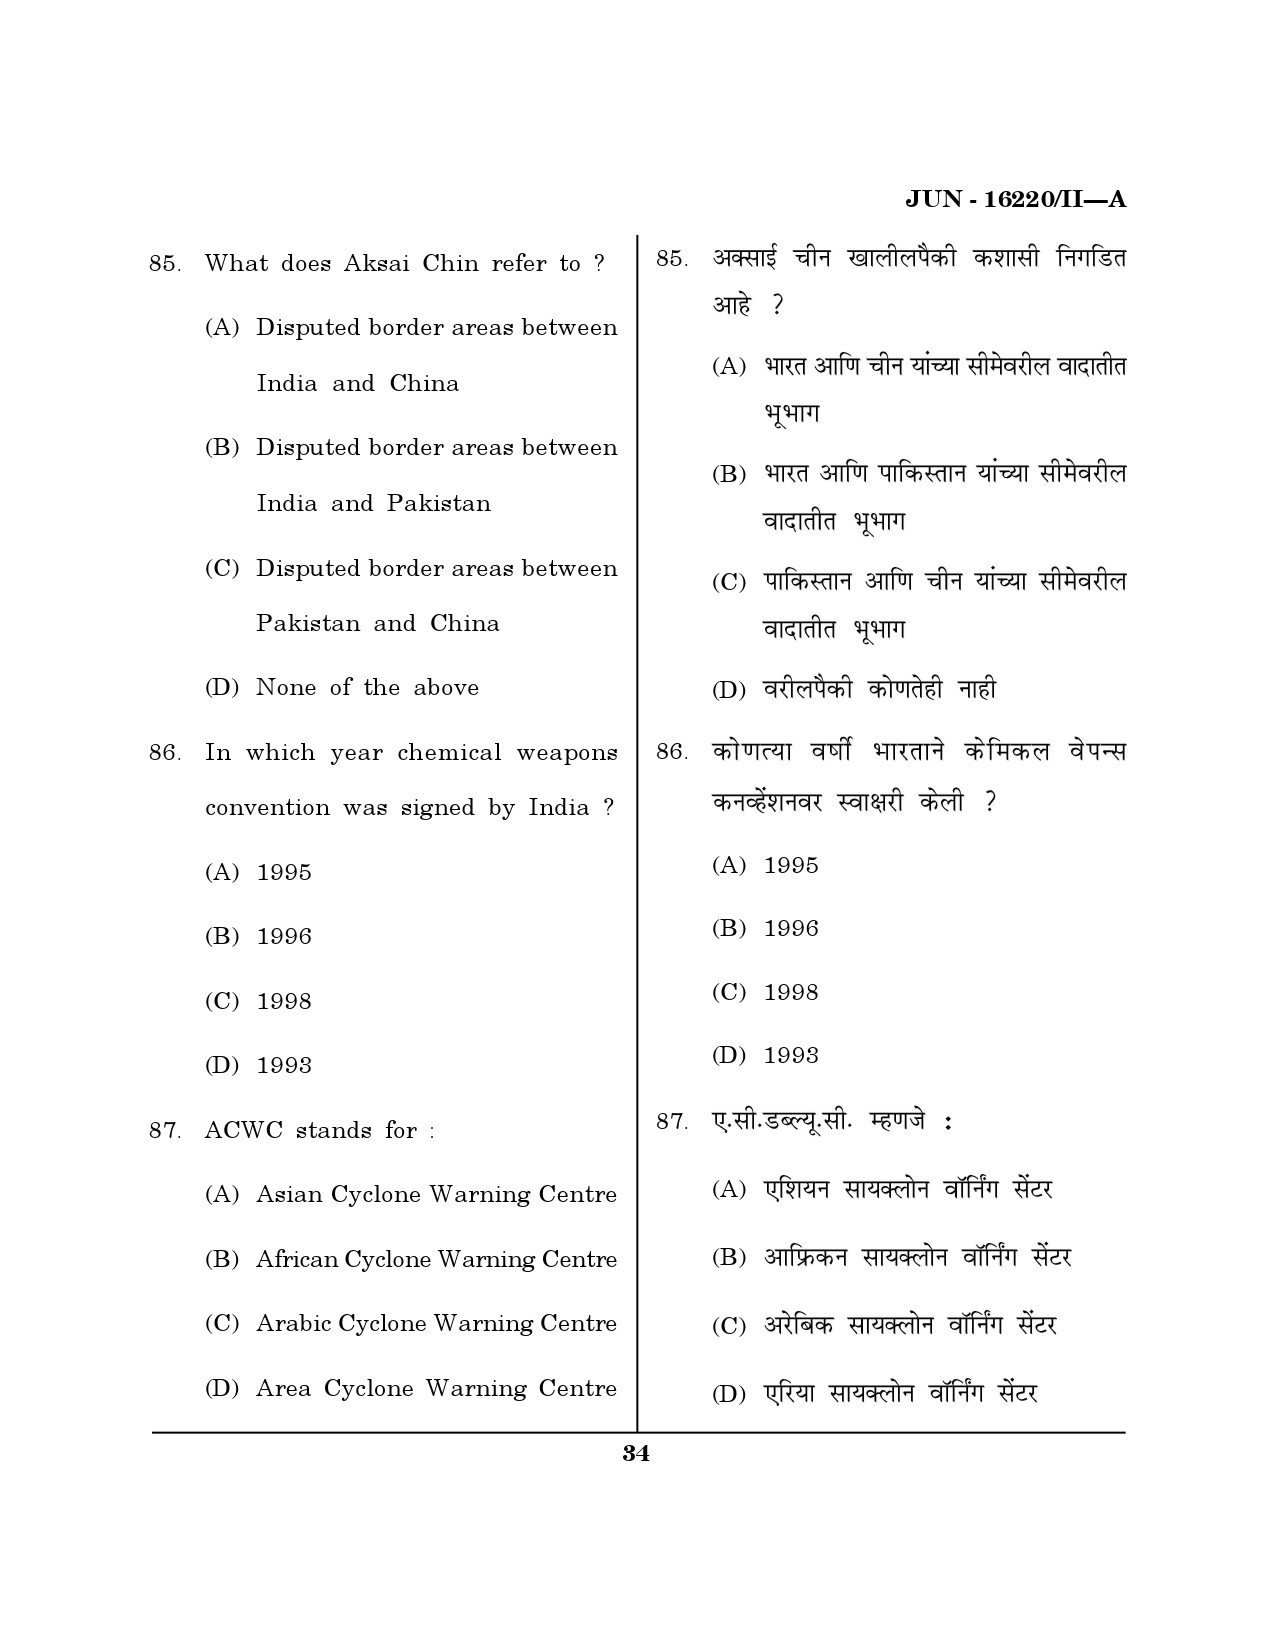 Maharashtra SET Defence and Strategic Studies Question Paper II June 2020 33